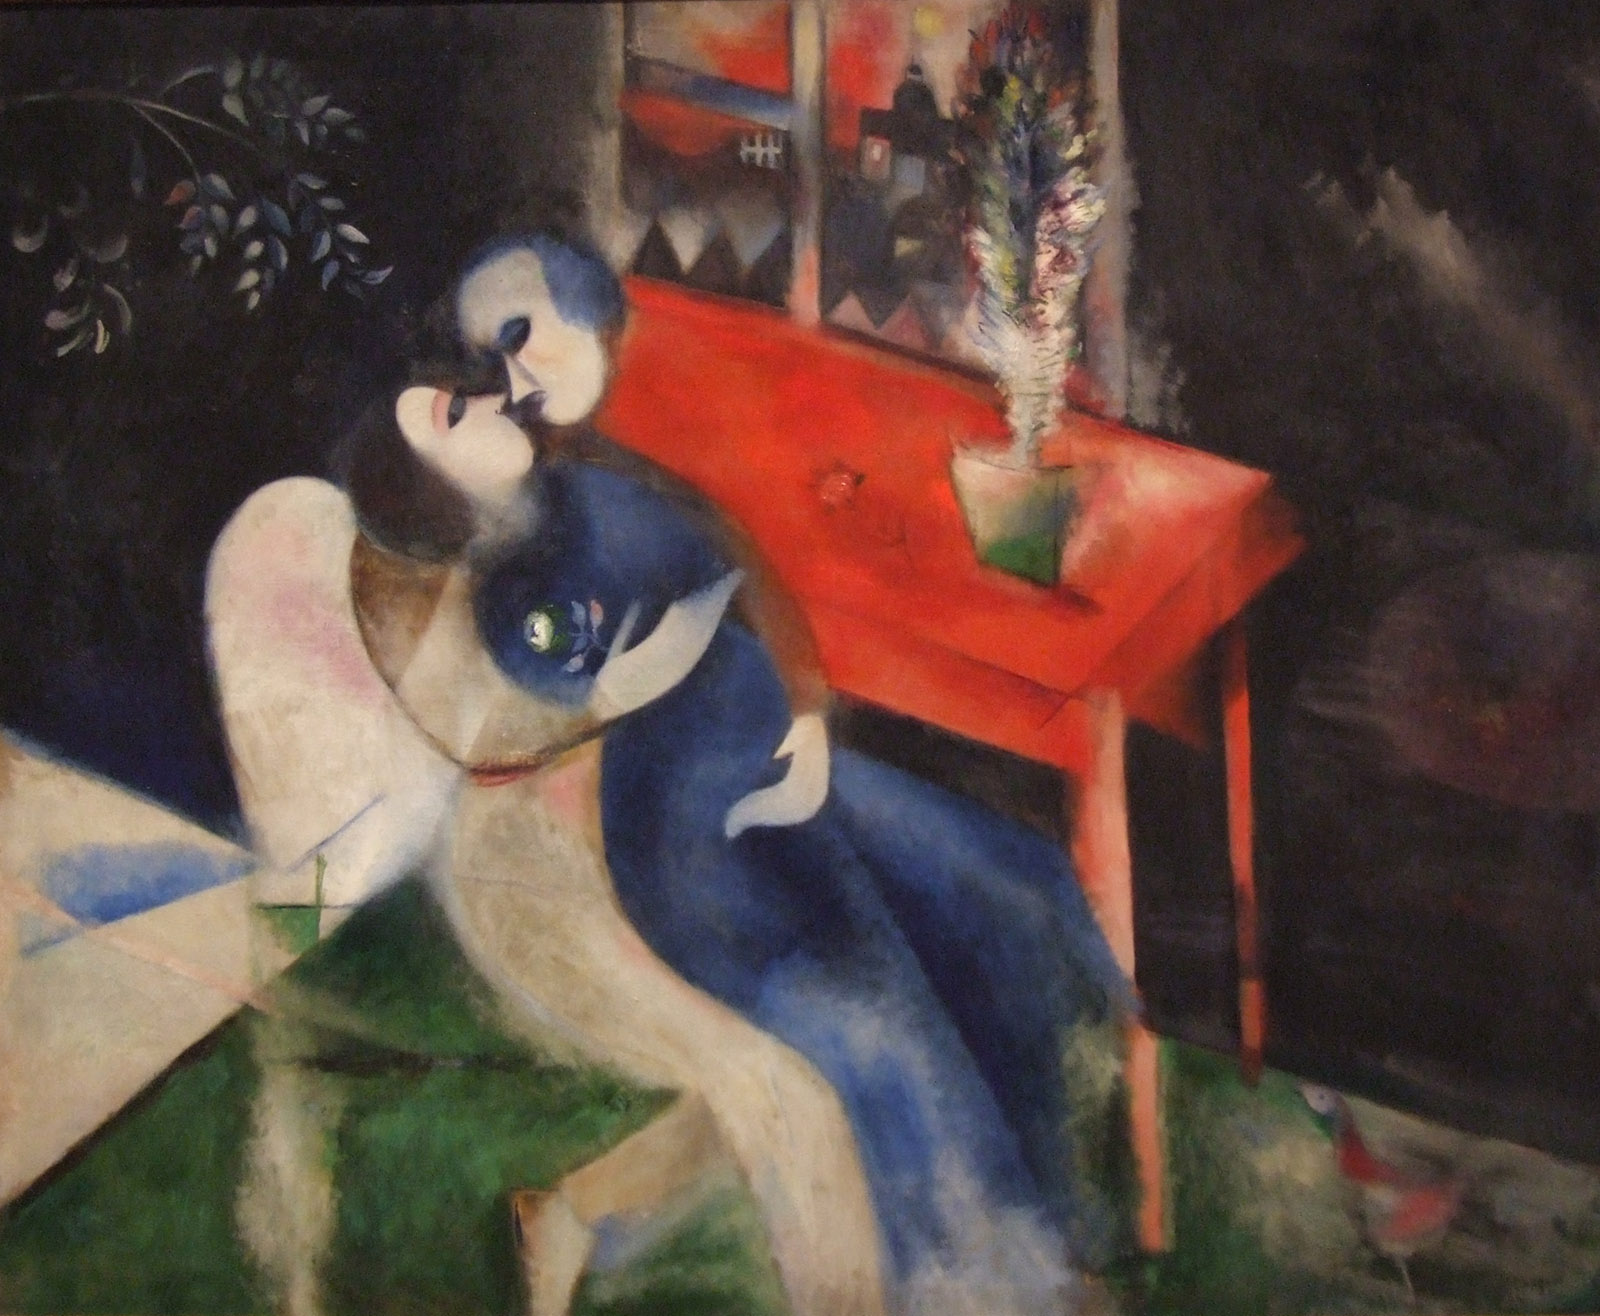 Marc+Chagall-1887-1985 (207).jpg